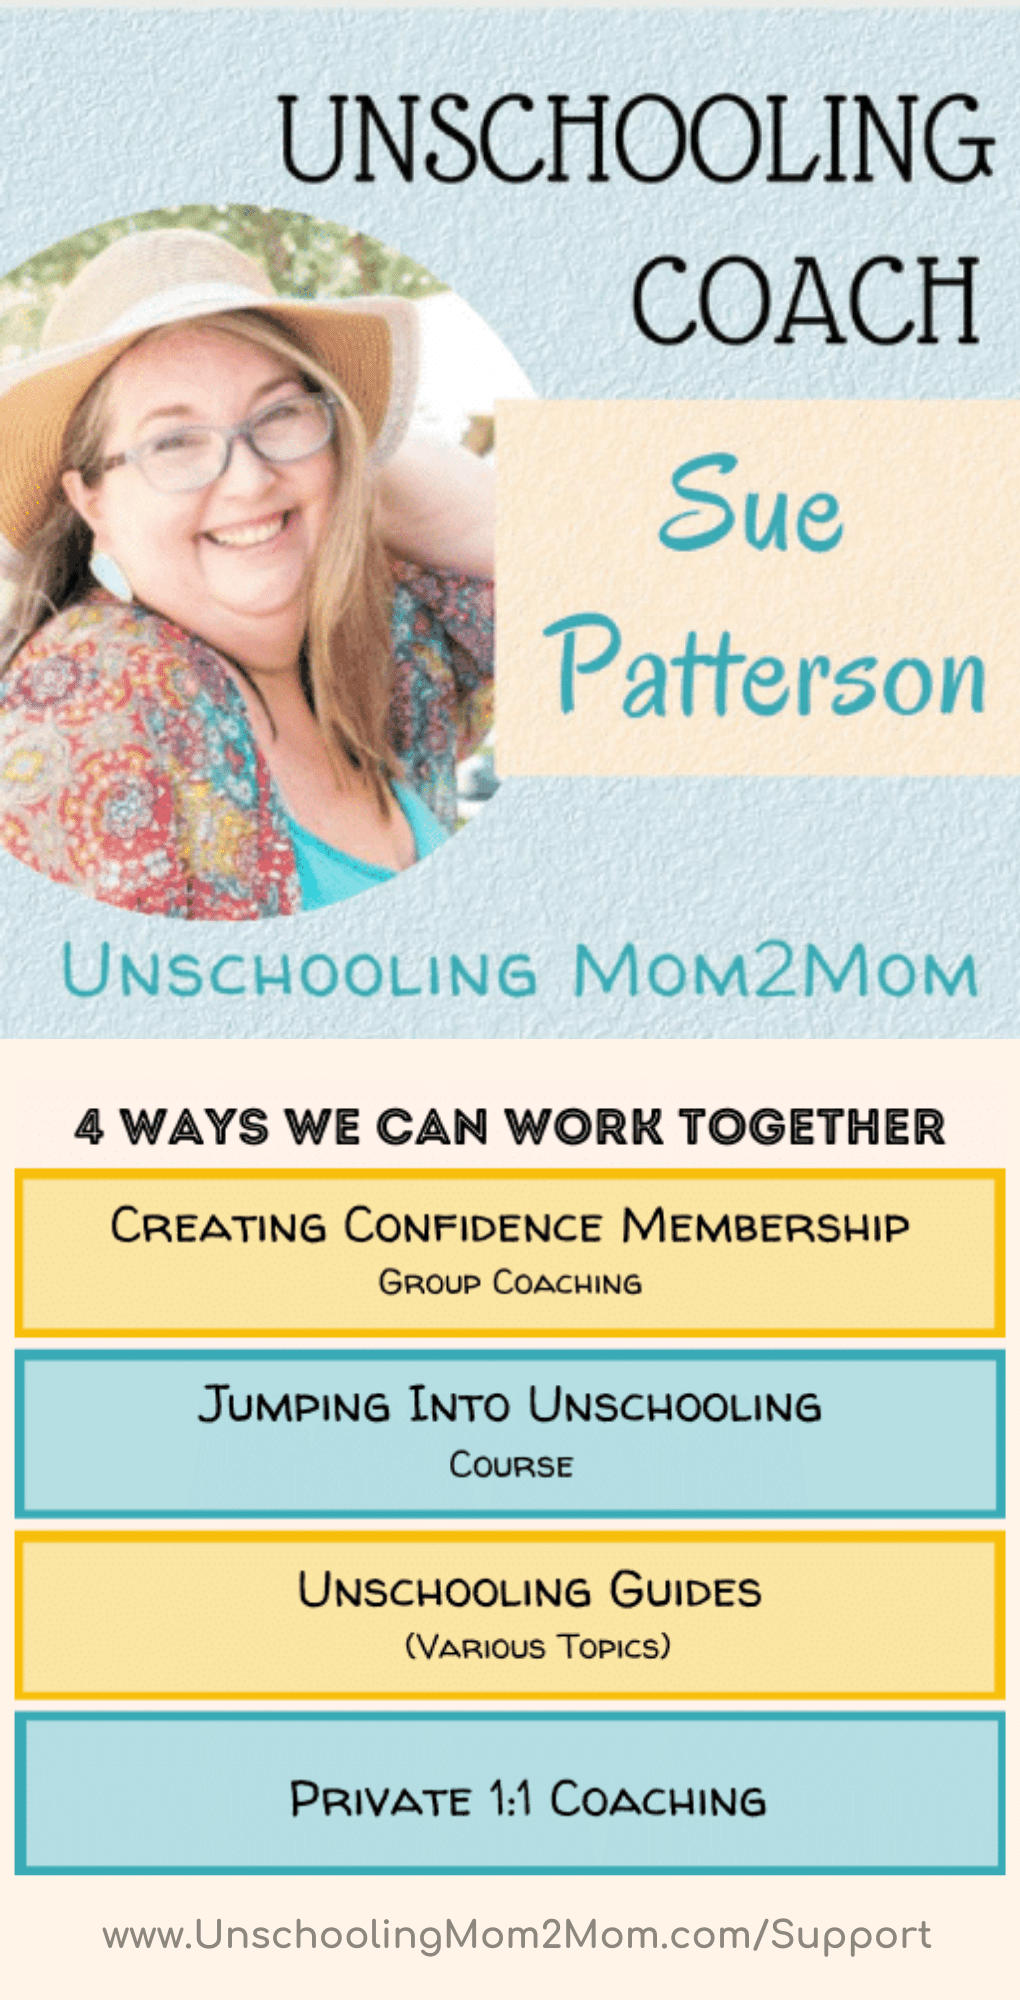 Sue Patterson Coaching